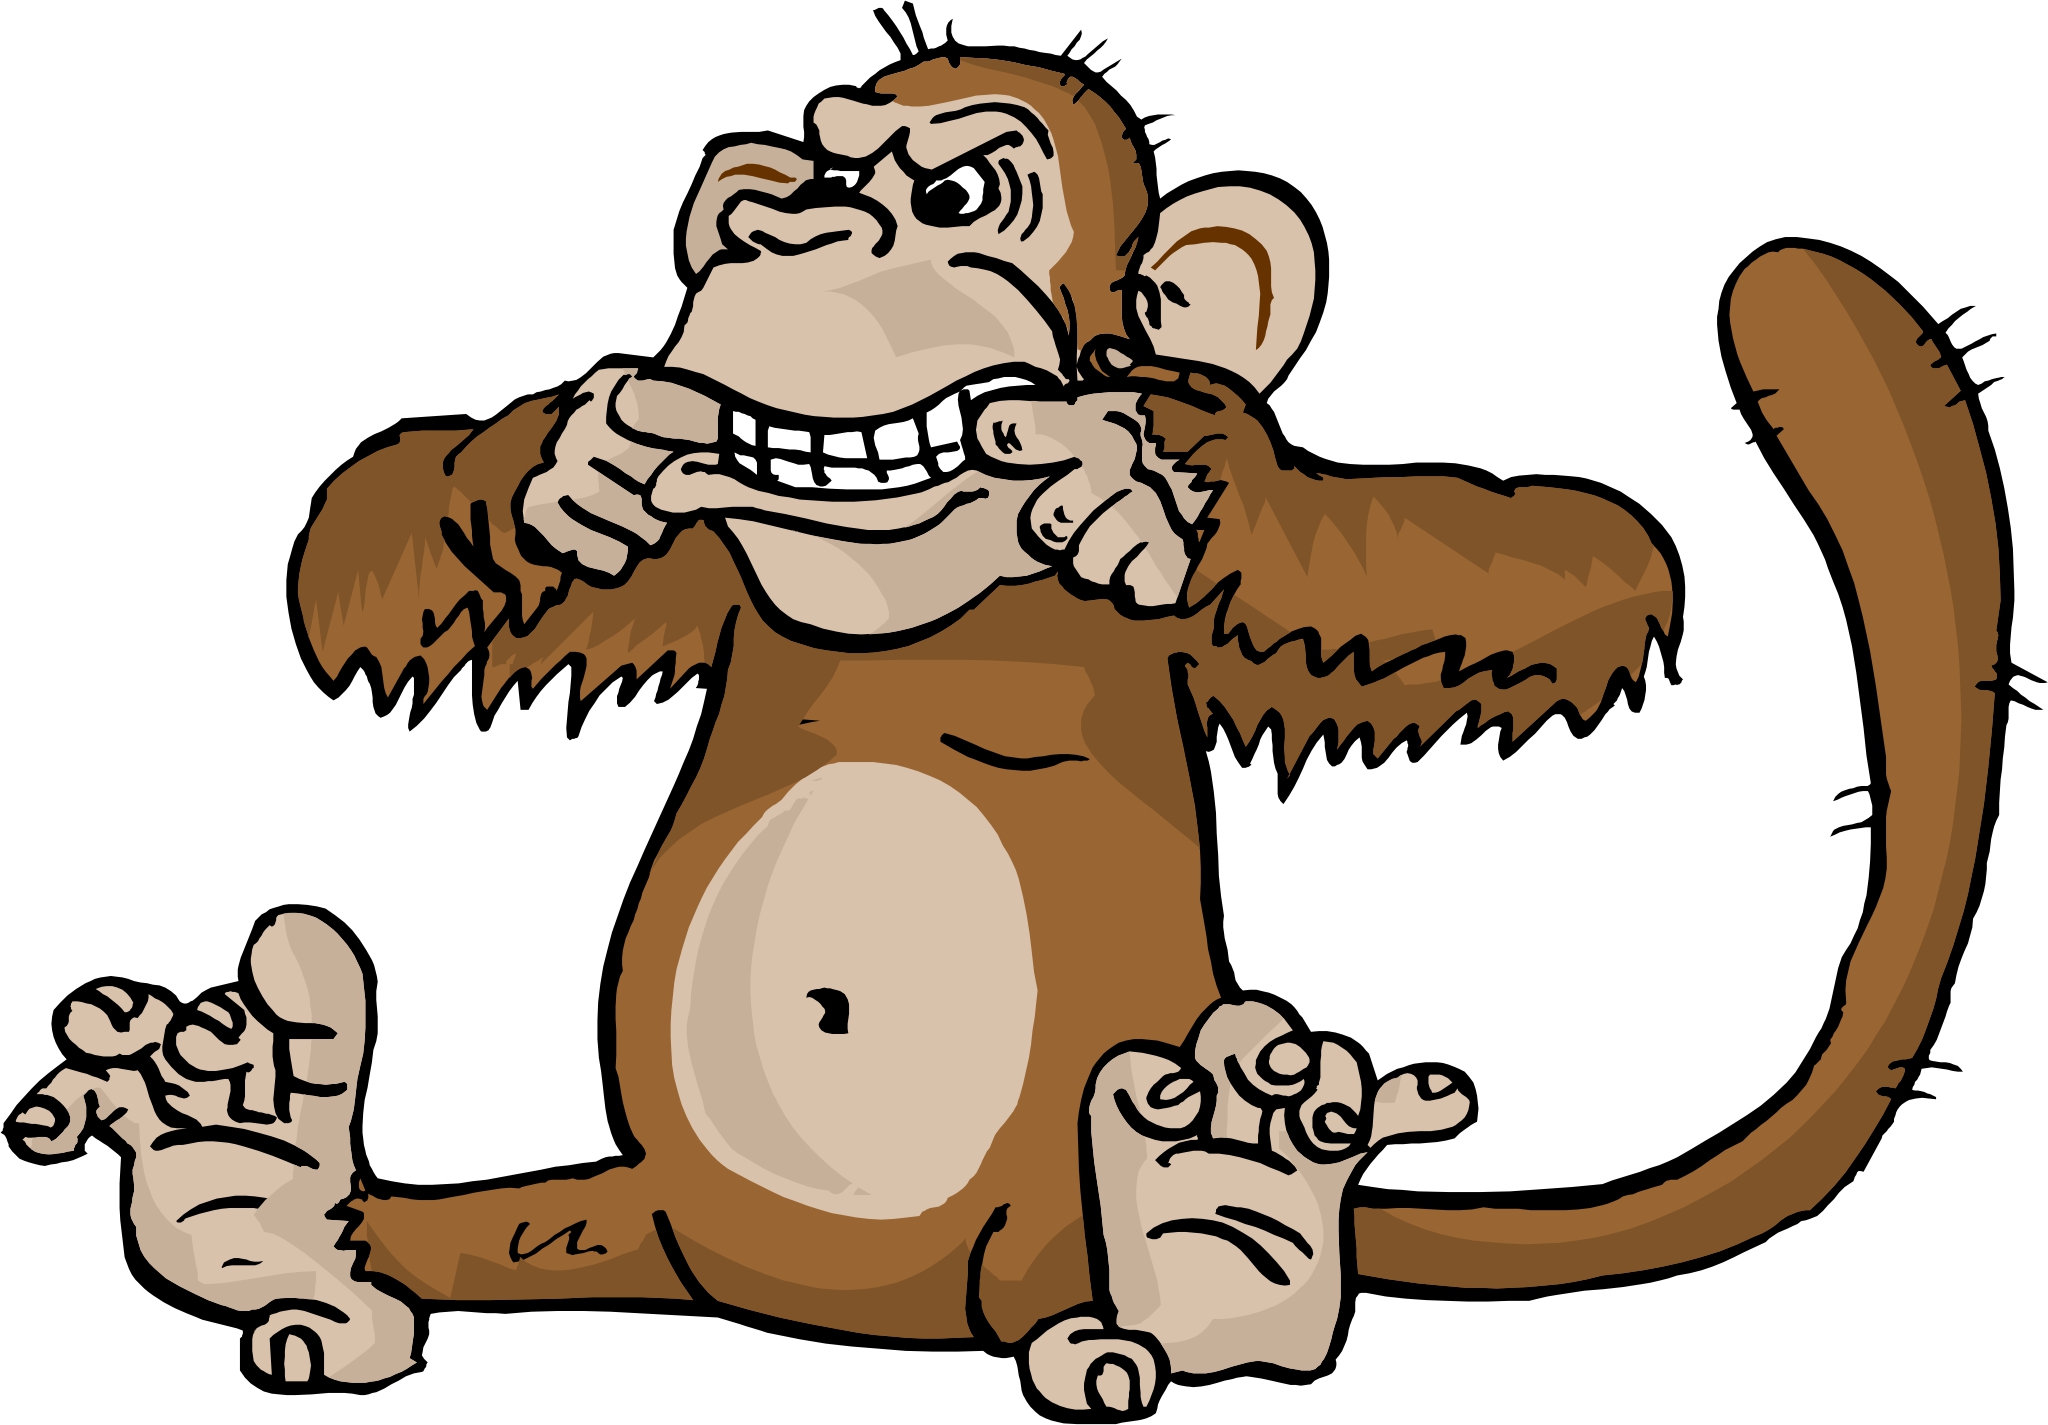 Monkey Funny Cartoon - ClipArt Best